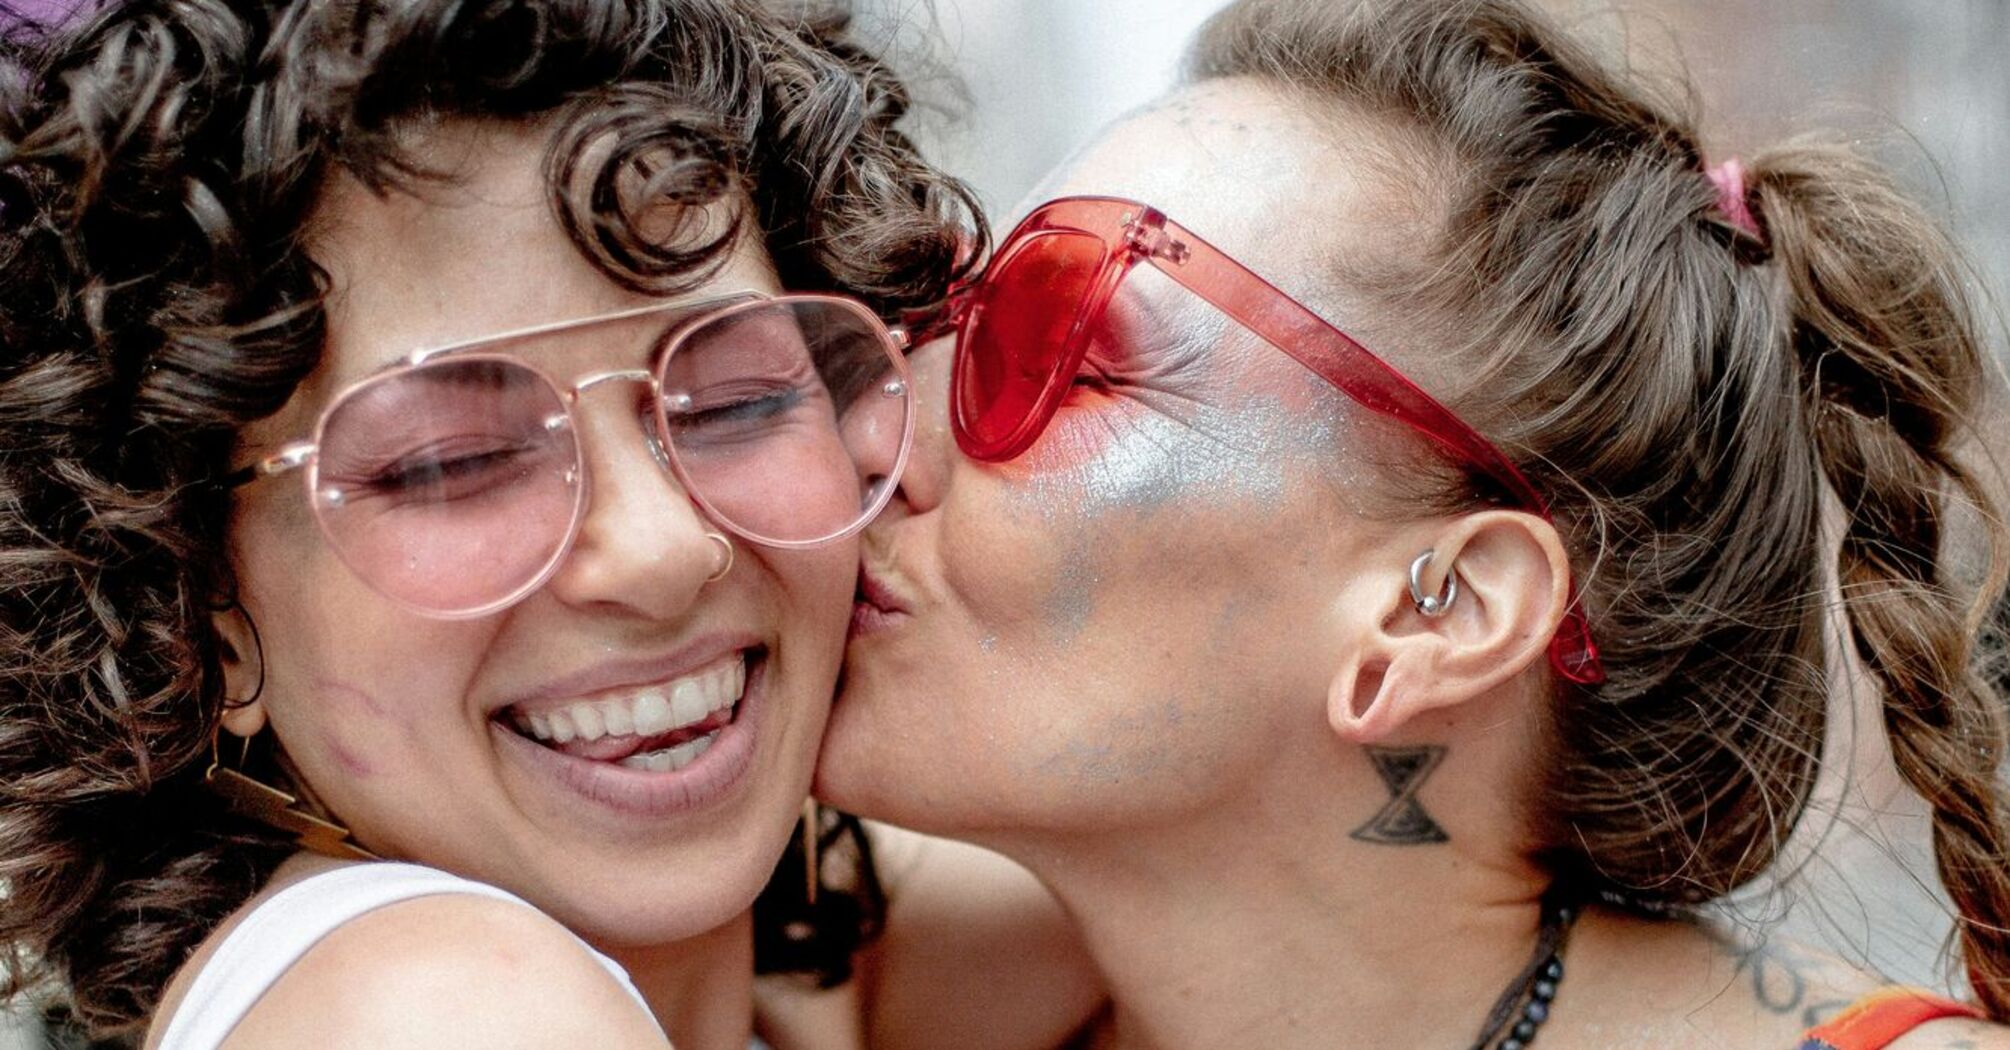 Two women celebrating, sharing a joyful kiss at a Pride